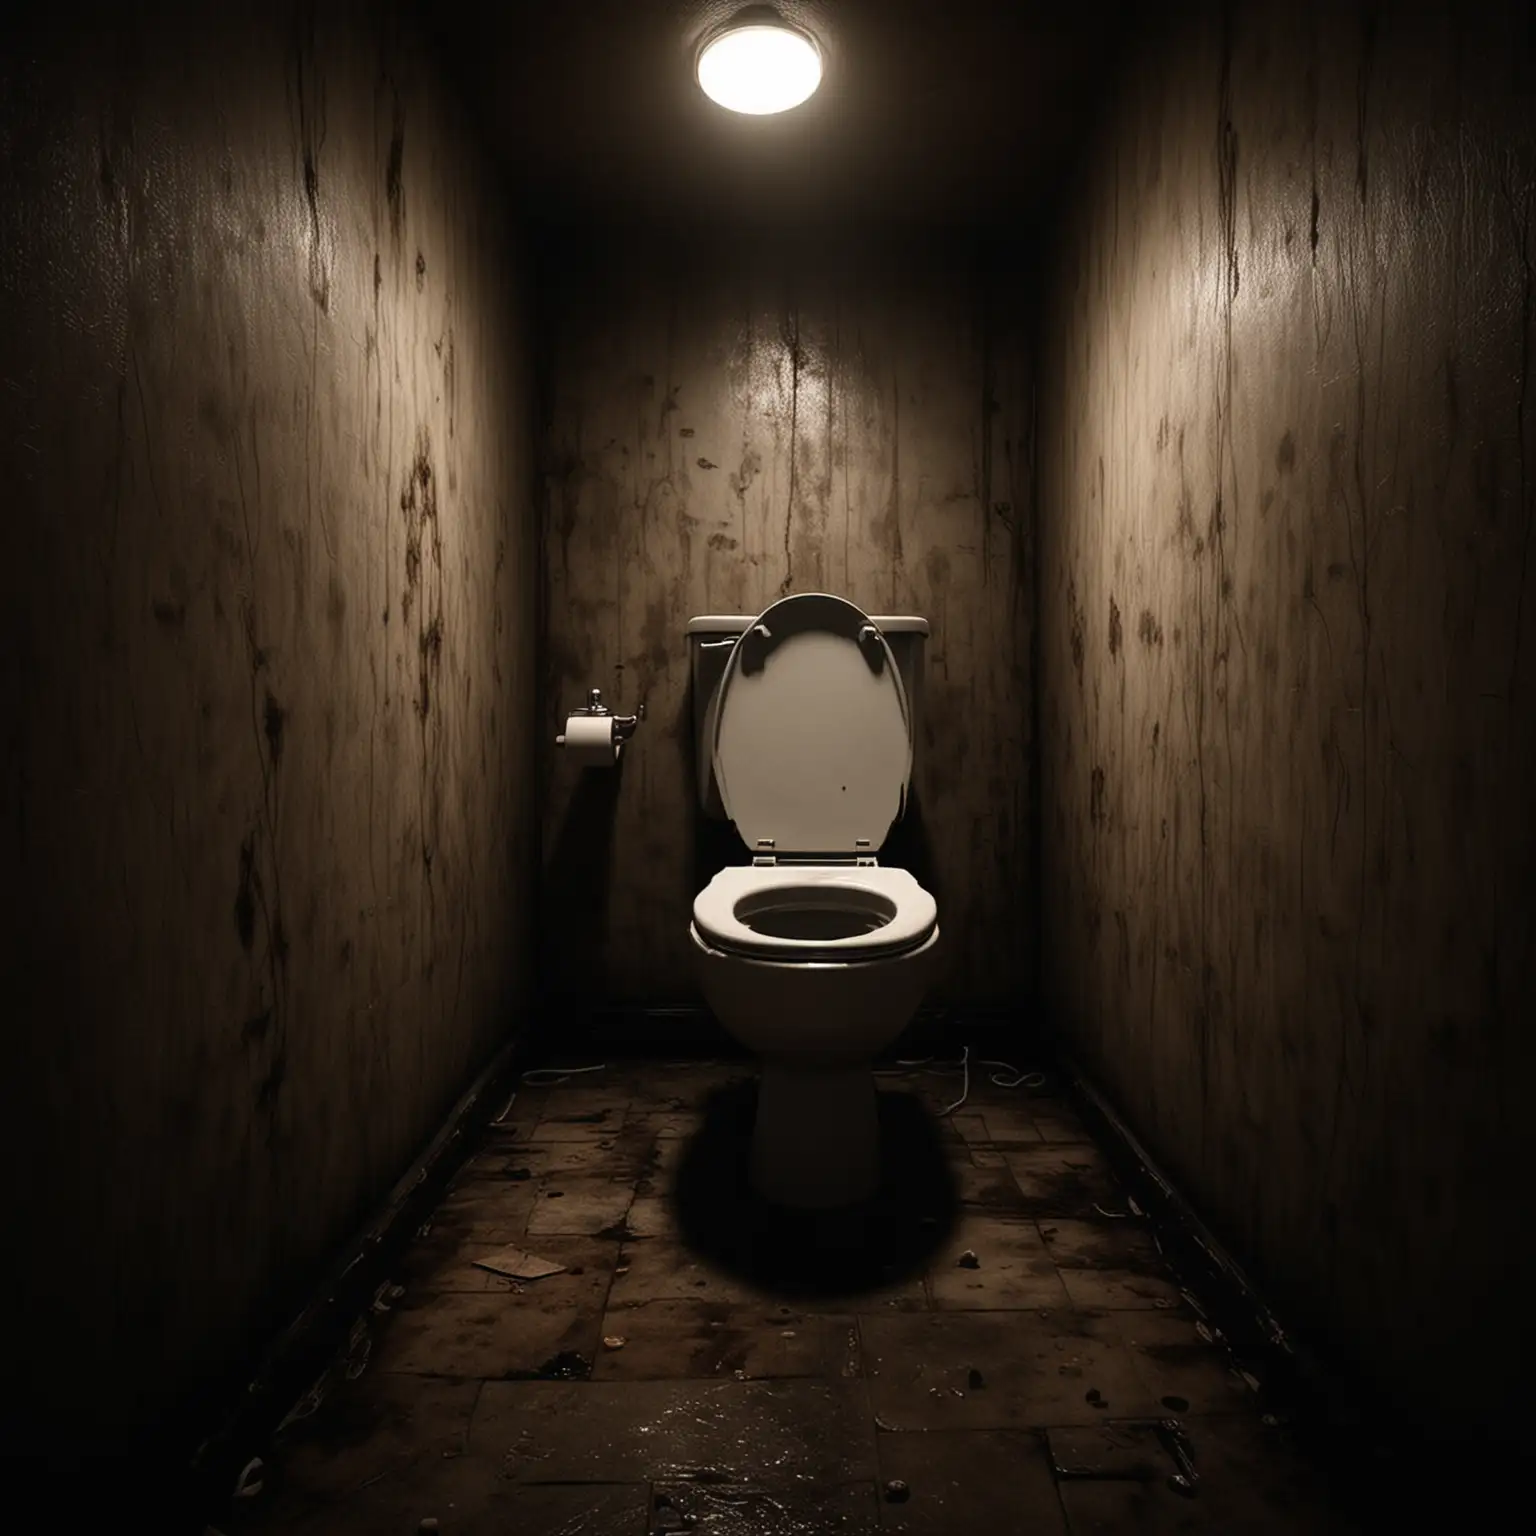 dimmed light toilet, horror like silent hill situation, dark atmosphere